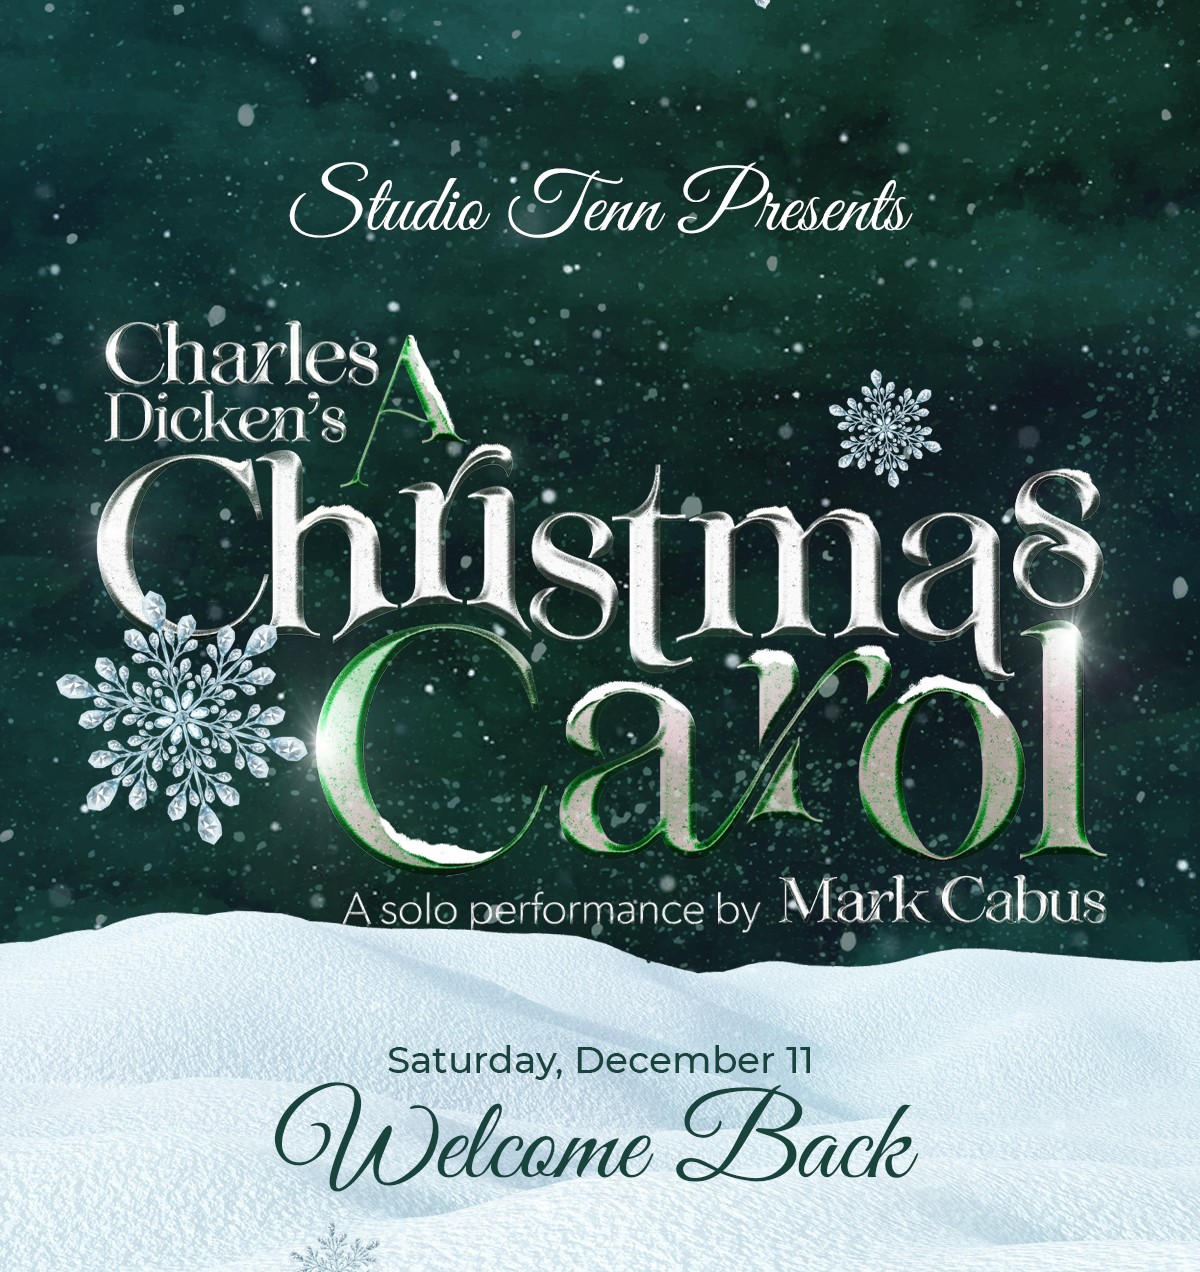 Official-Christmas-Carol-Social-Teaser-01 (1).jpg